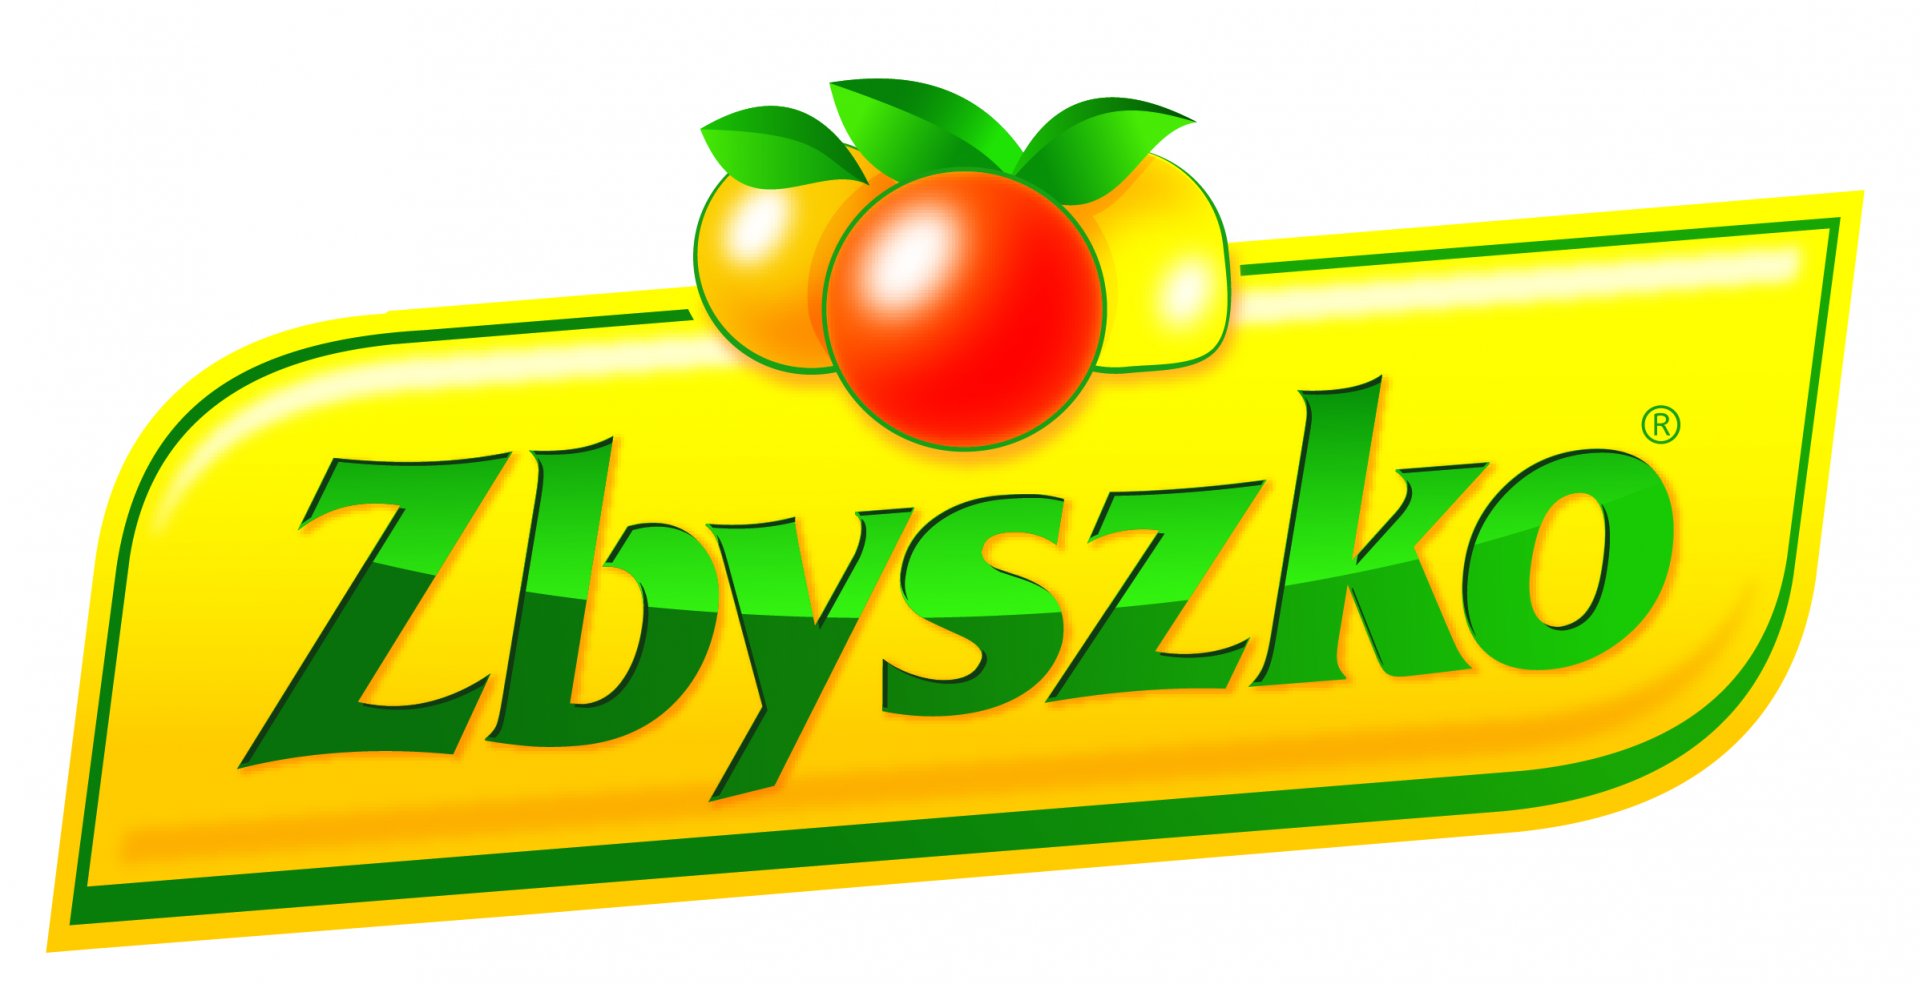 Zbyszko Company S.A.